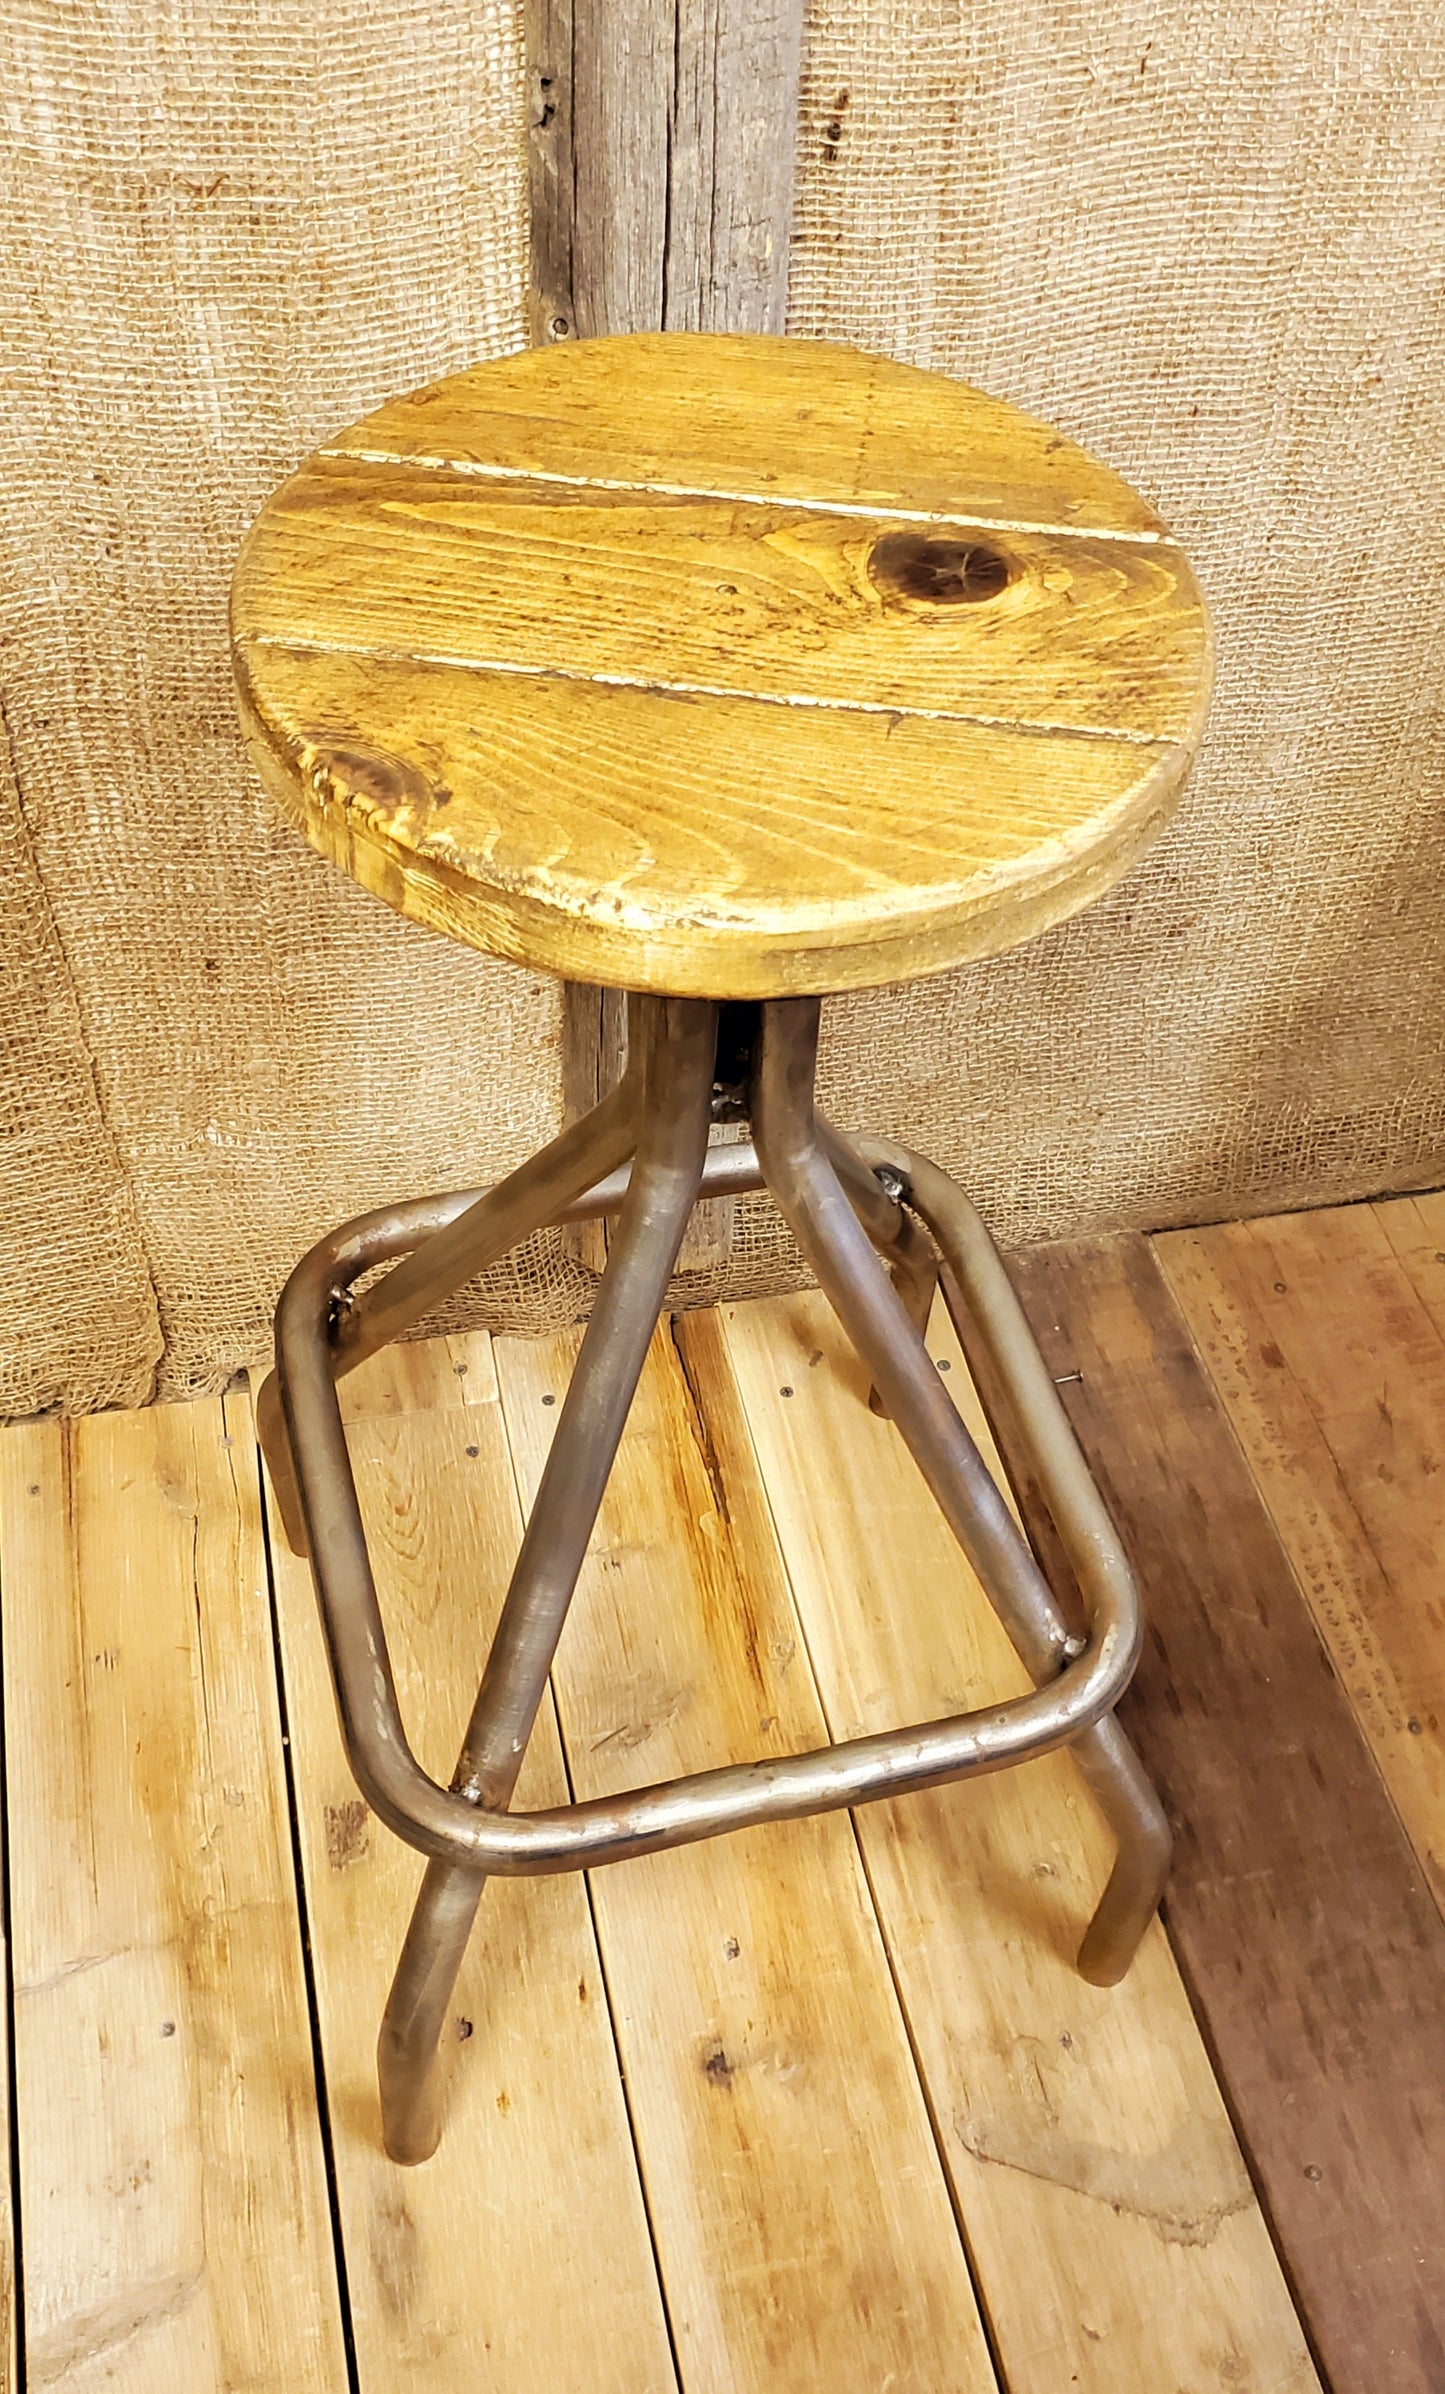 The 'Taylor' Square Base Tubular Adjustable Height Stool - Spearhead Collection - Stools - Bar stool, industrial stool, stools, swivel stool, vintage stool